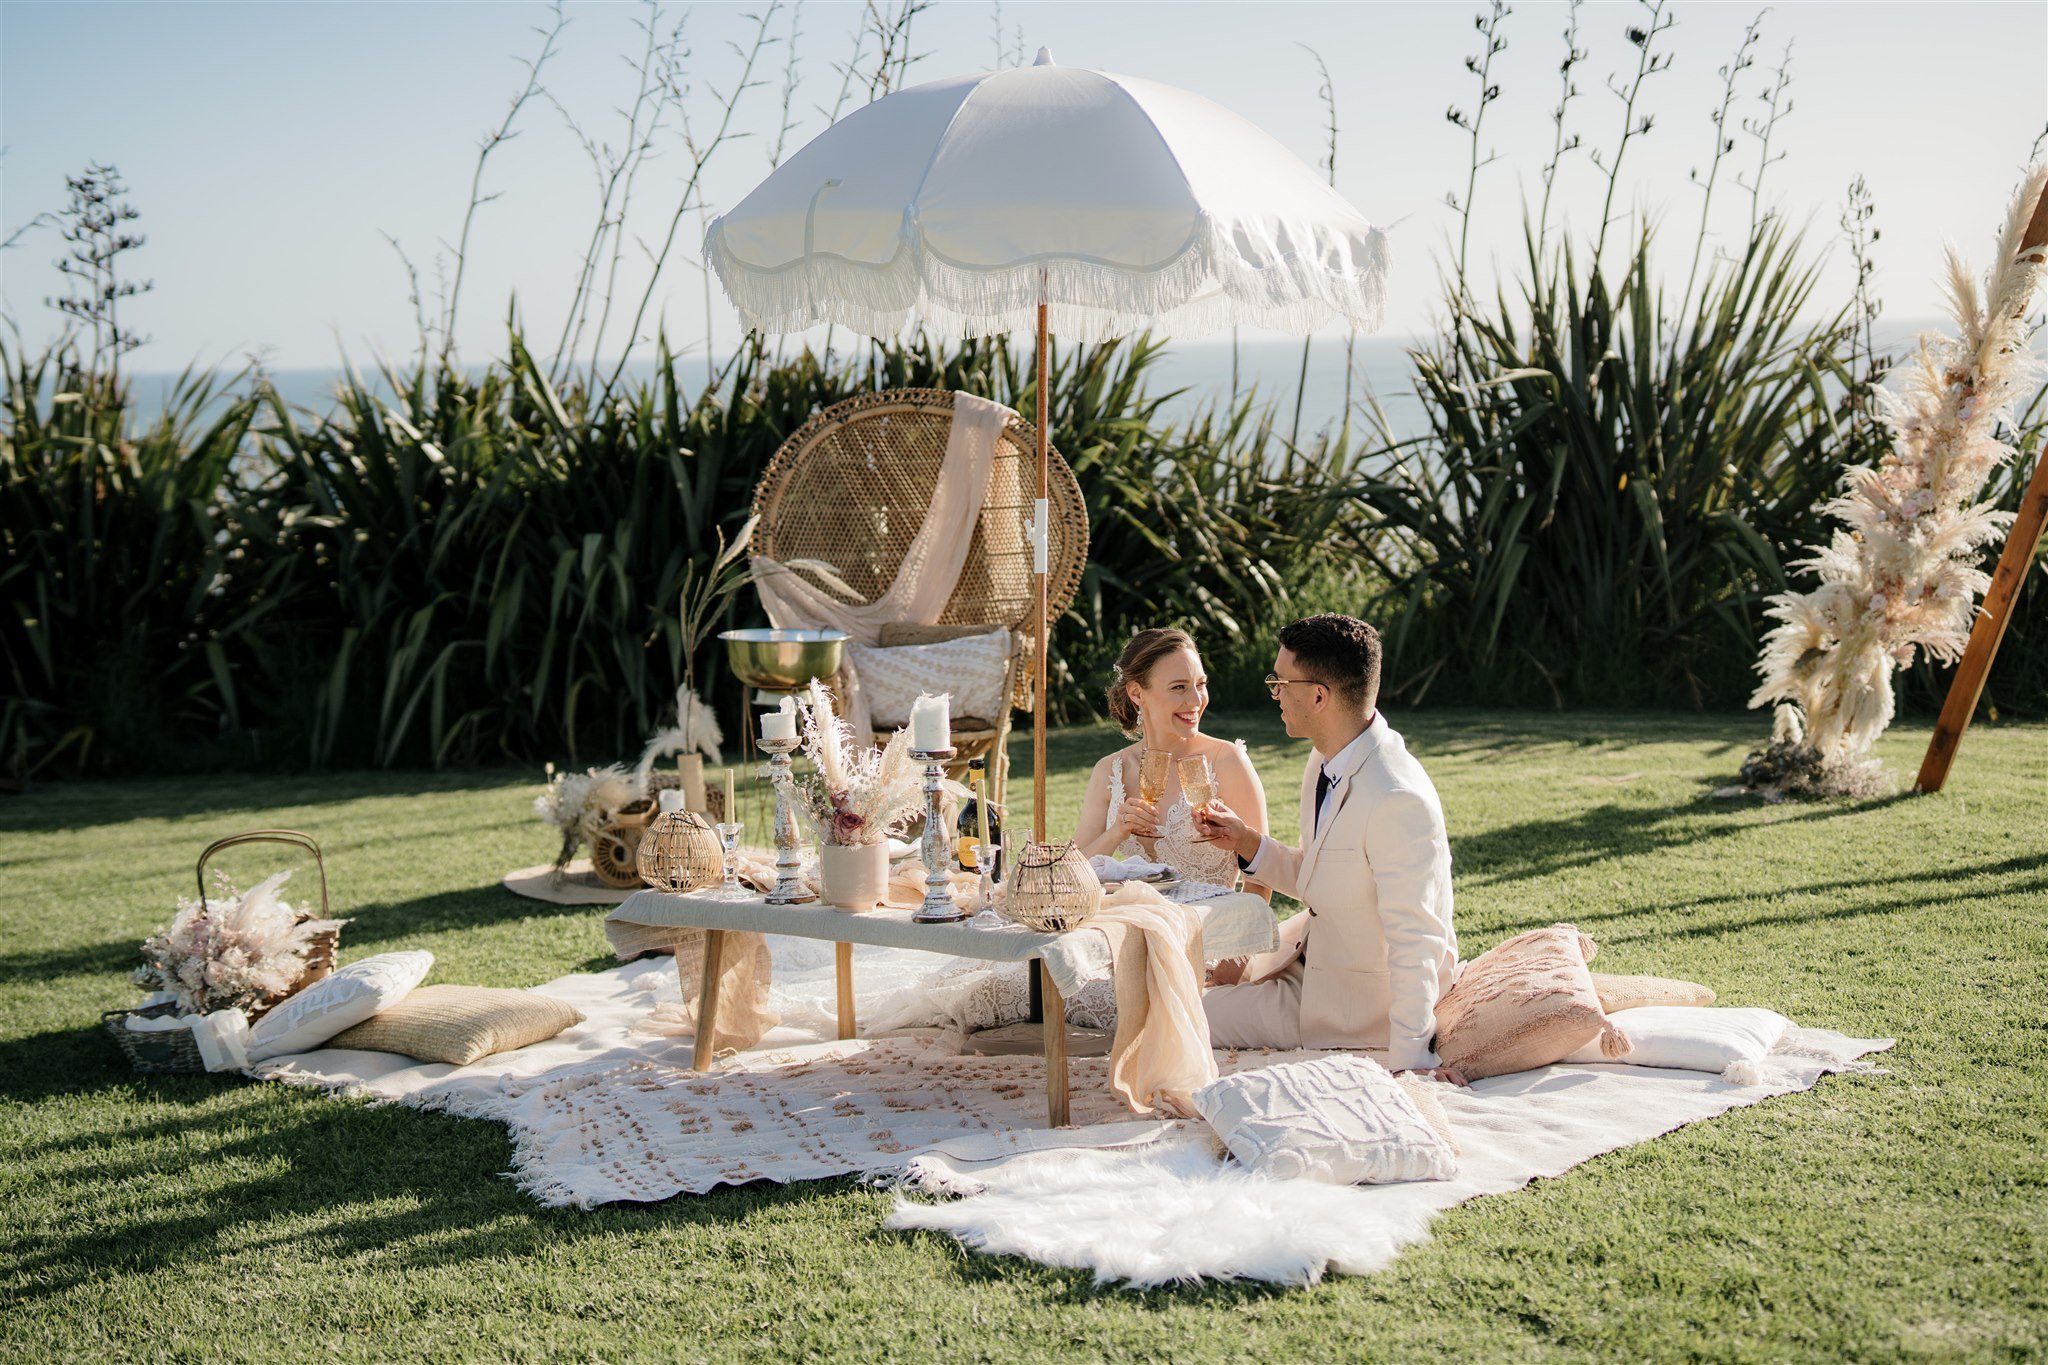 castaways-NZ-new-zealand-auckland-wedding-photographer-photography-videography-film-dear-white-productions-best-venue-waiuku-engagement-elopement-style-beach-intimate (277).jpg